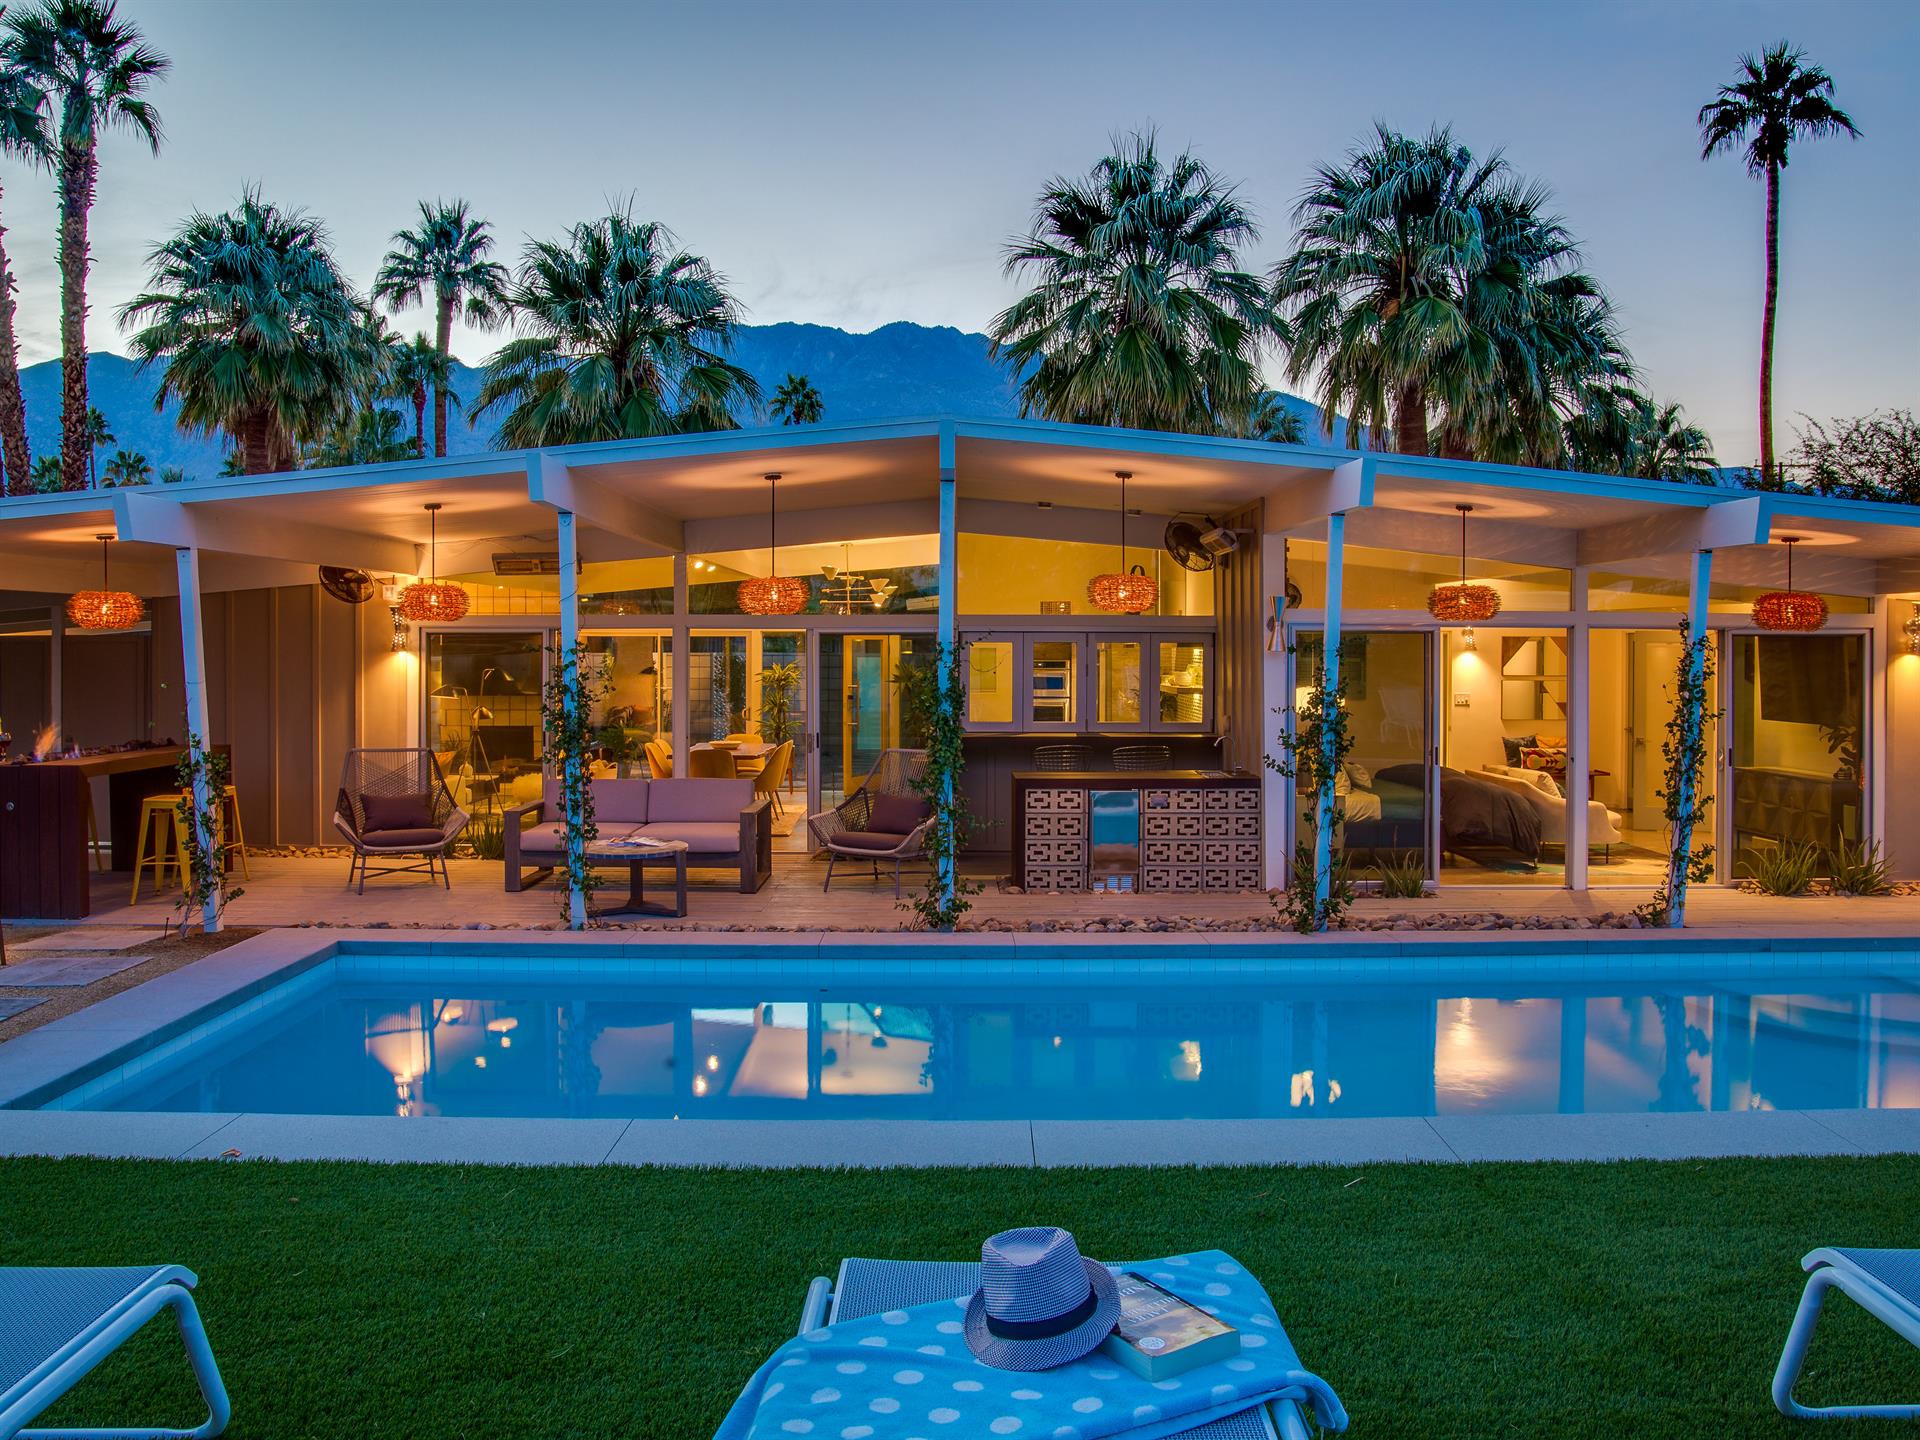 Lana Turner House Palm Springs - Gwerh